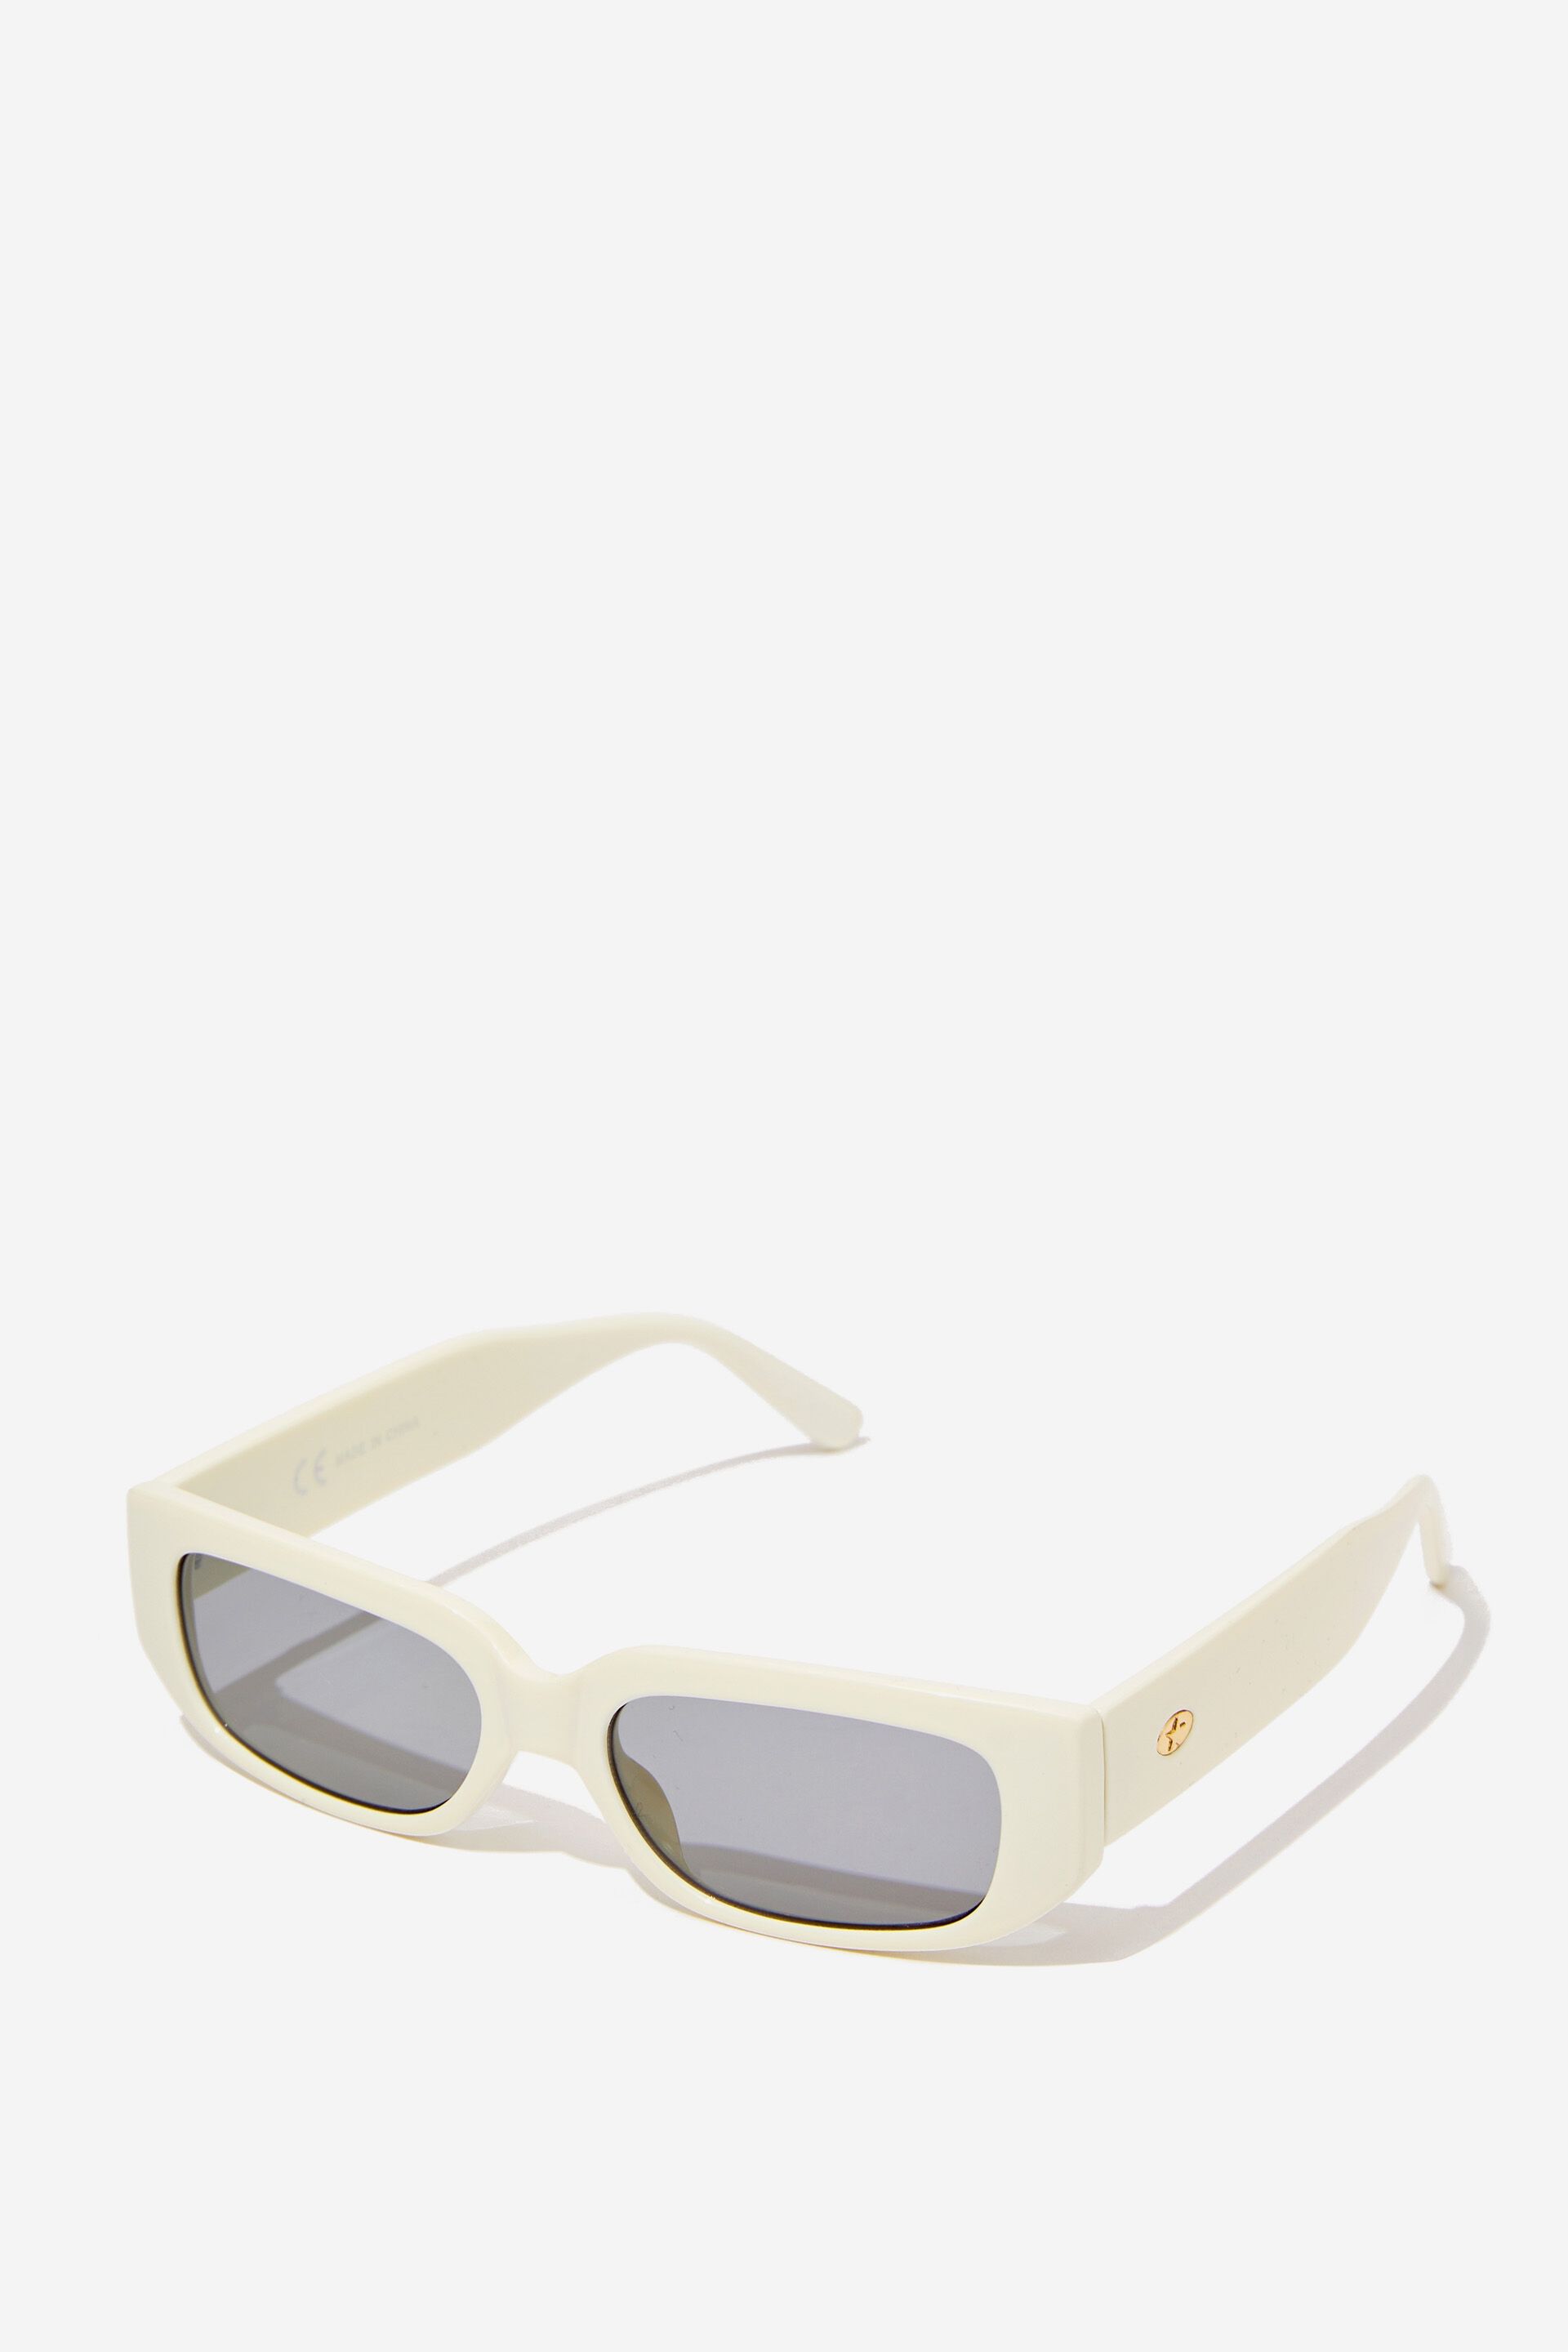 Discover 140+ white sunglasses best